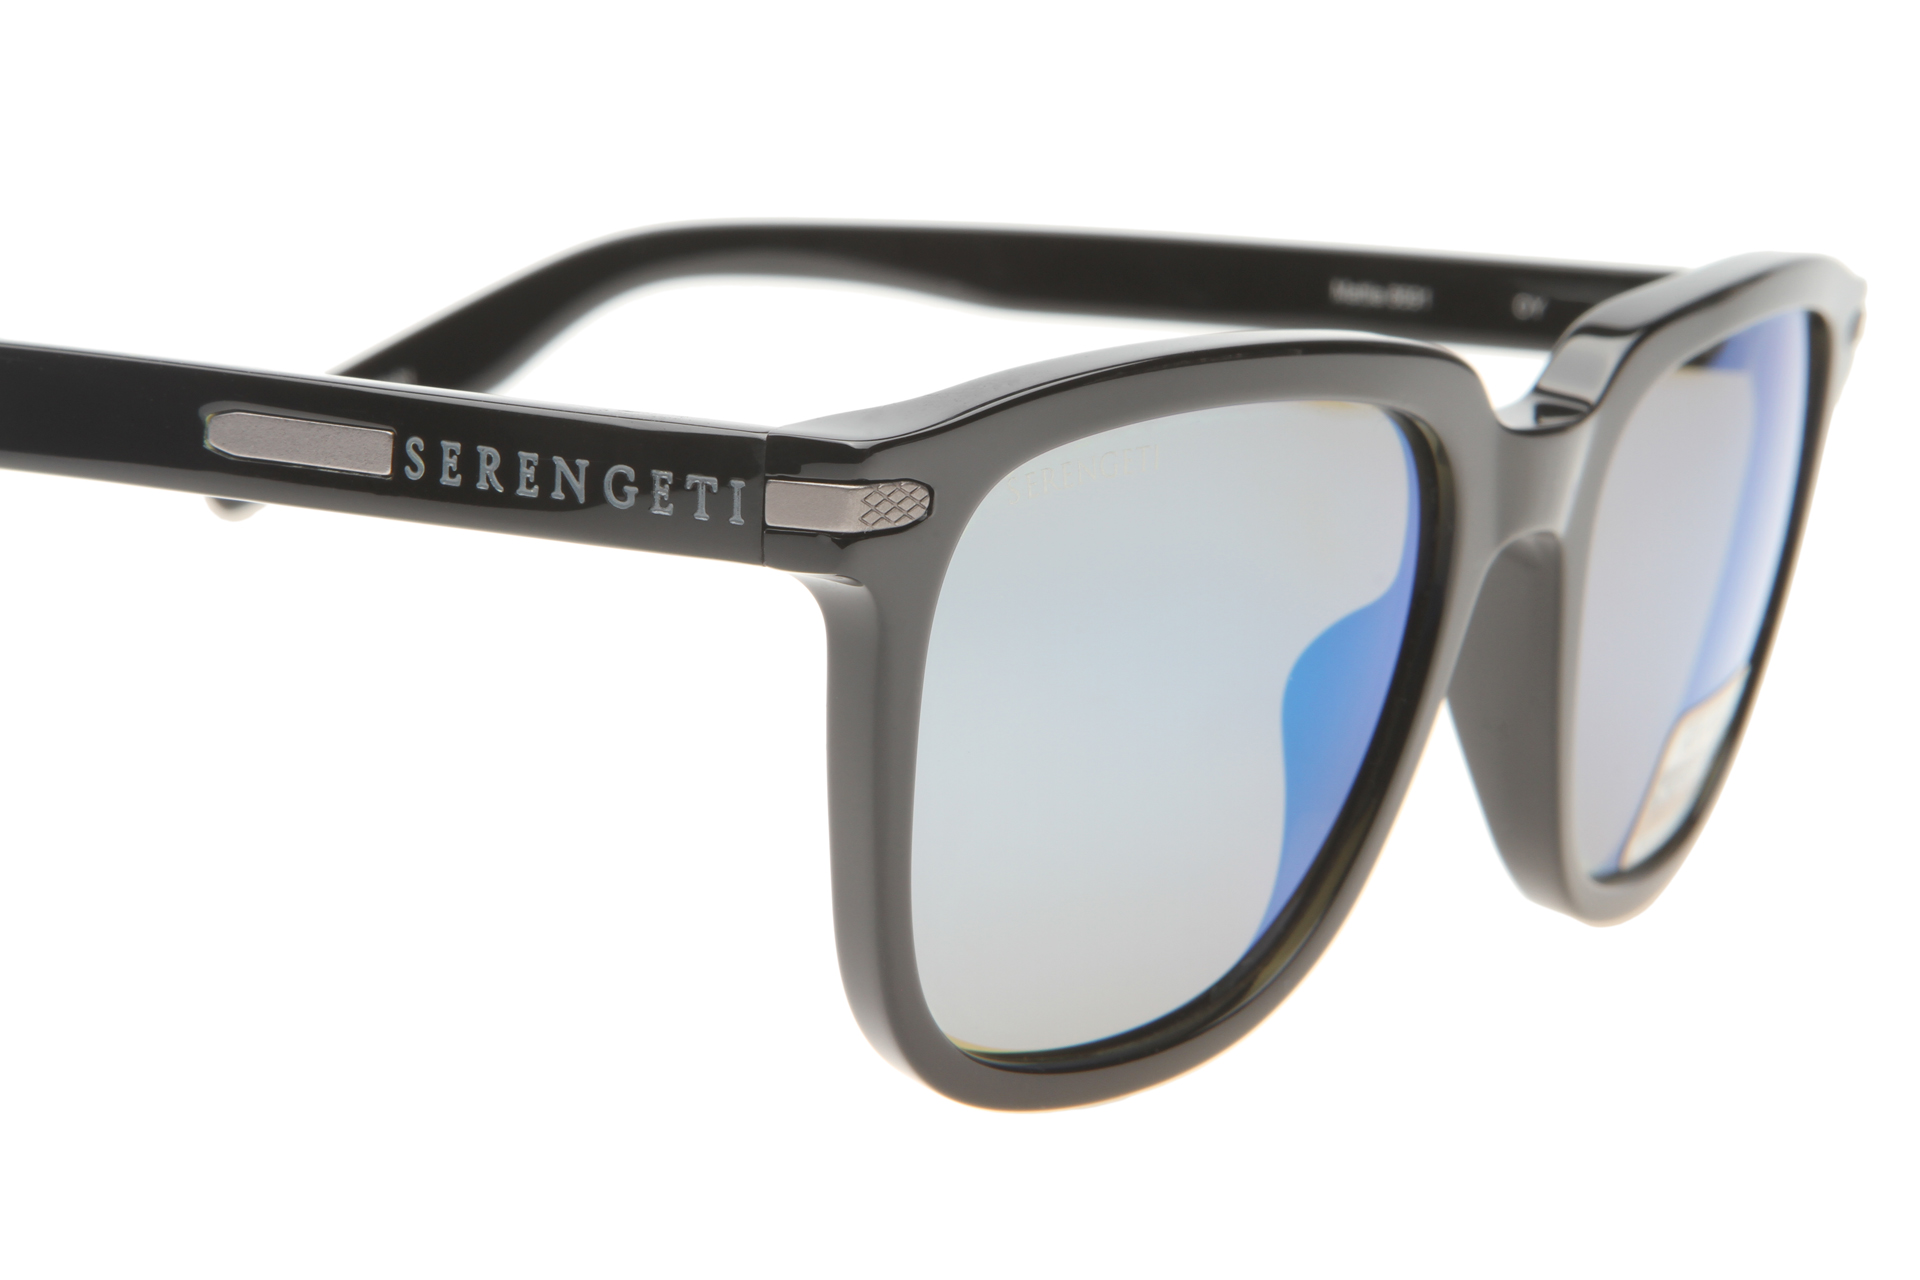 Serengeti Sunglasses Mattia 8691 Shiny Black Blue 555nm Polarized 